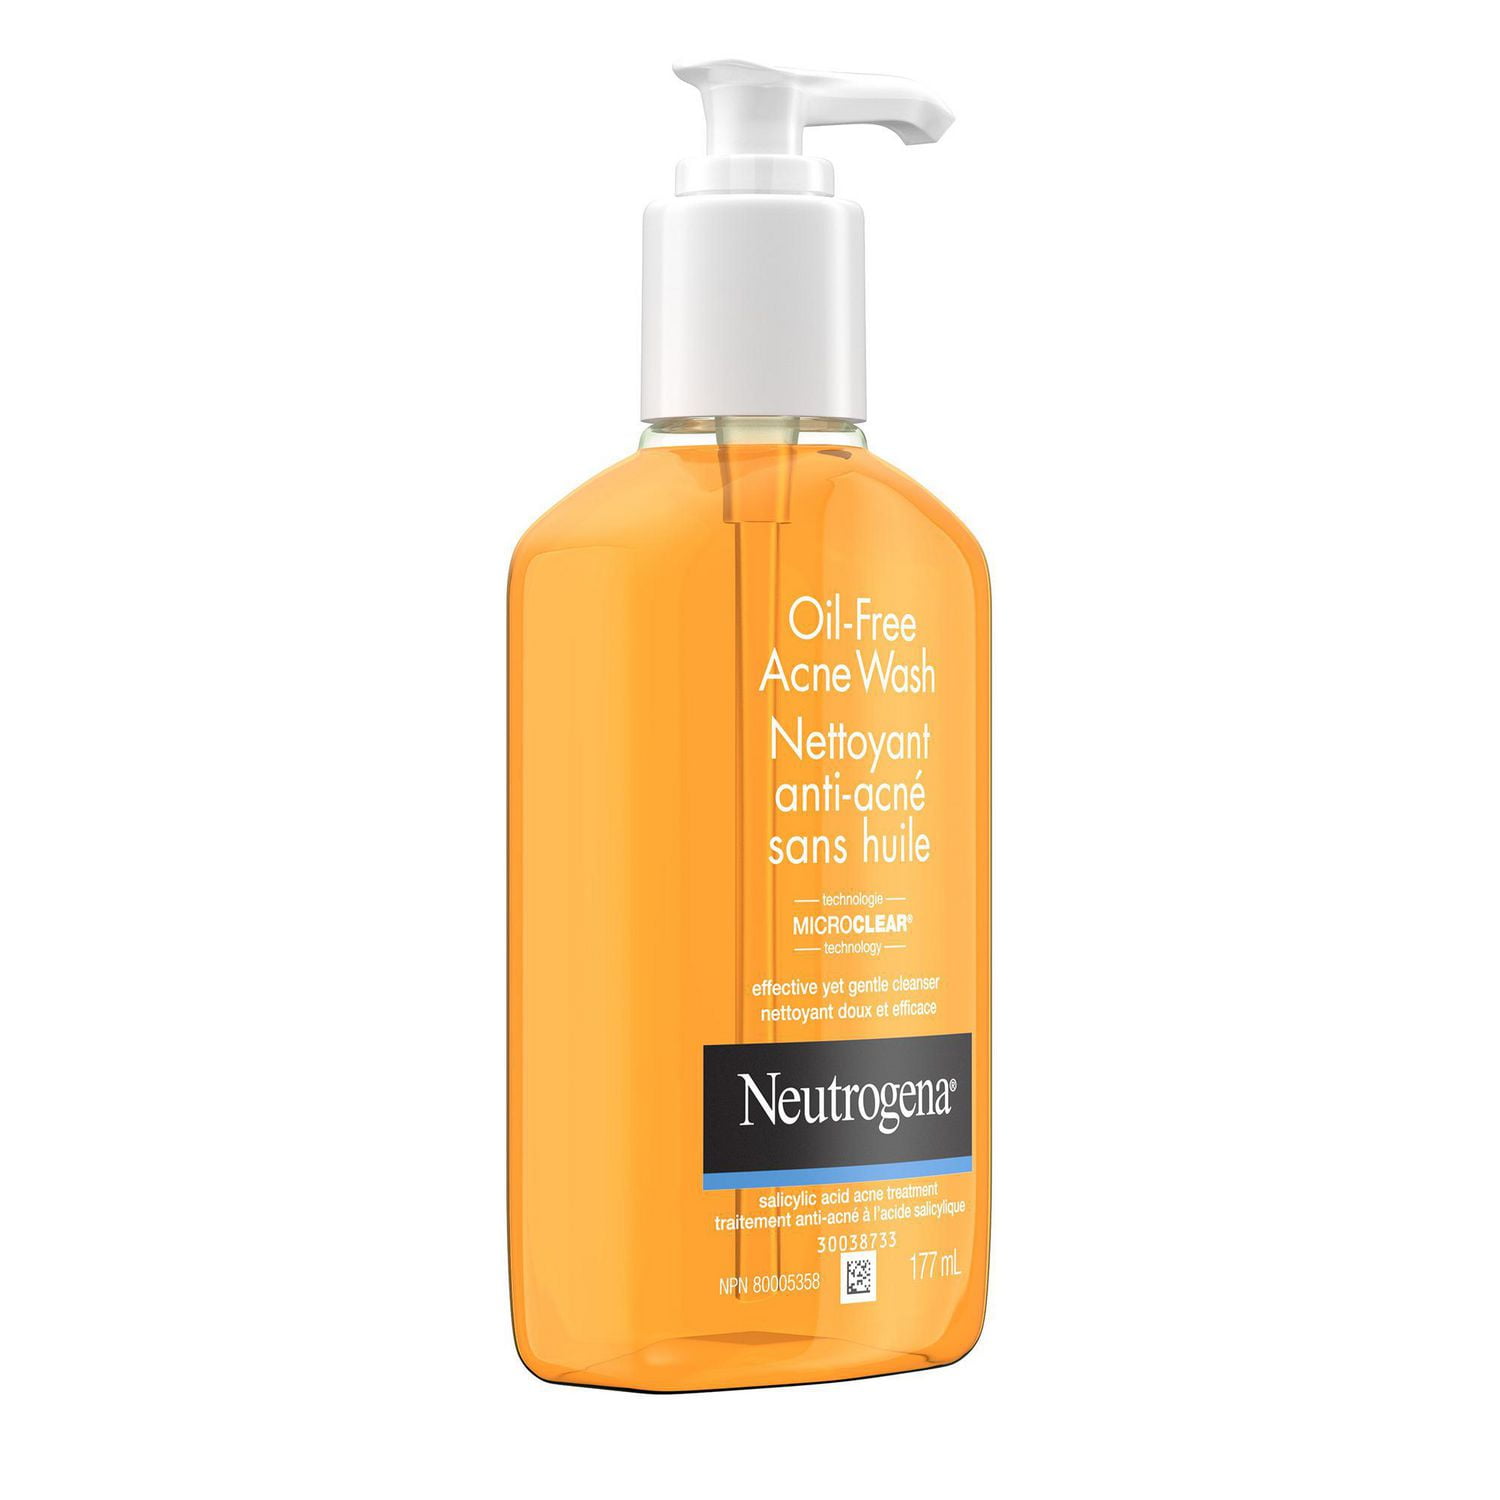 Neutrogena Oil Free Acne Face Wash with Salicylic Acid, 269 mL